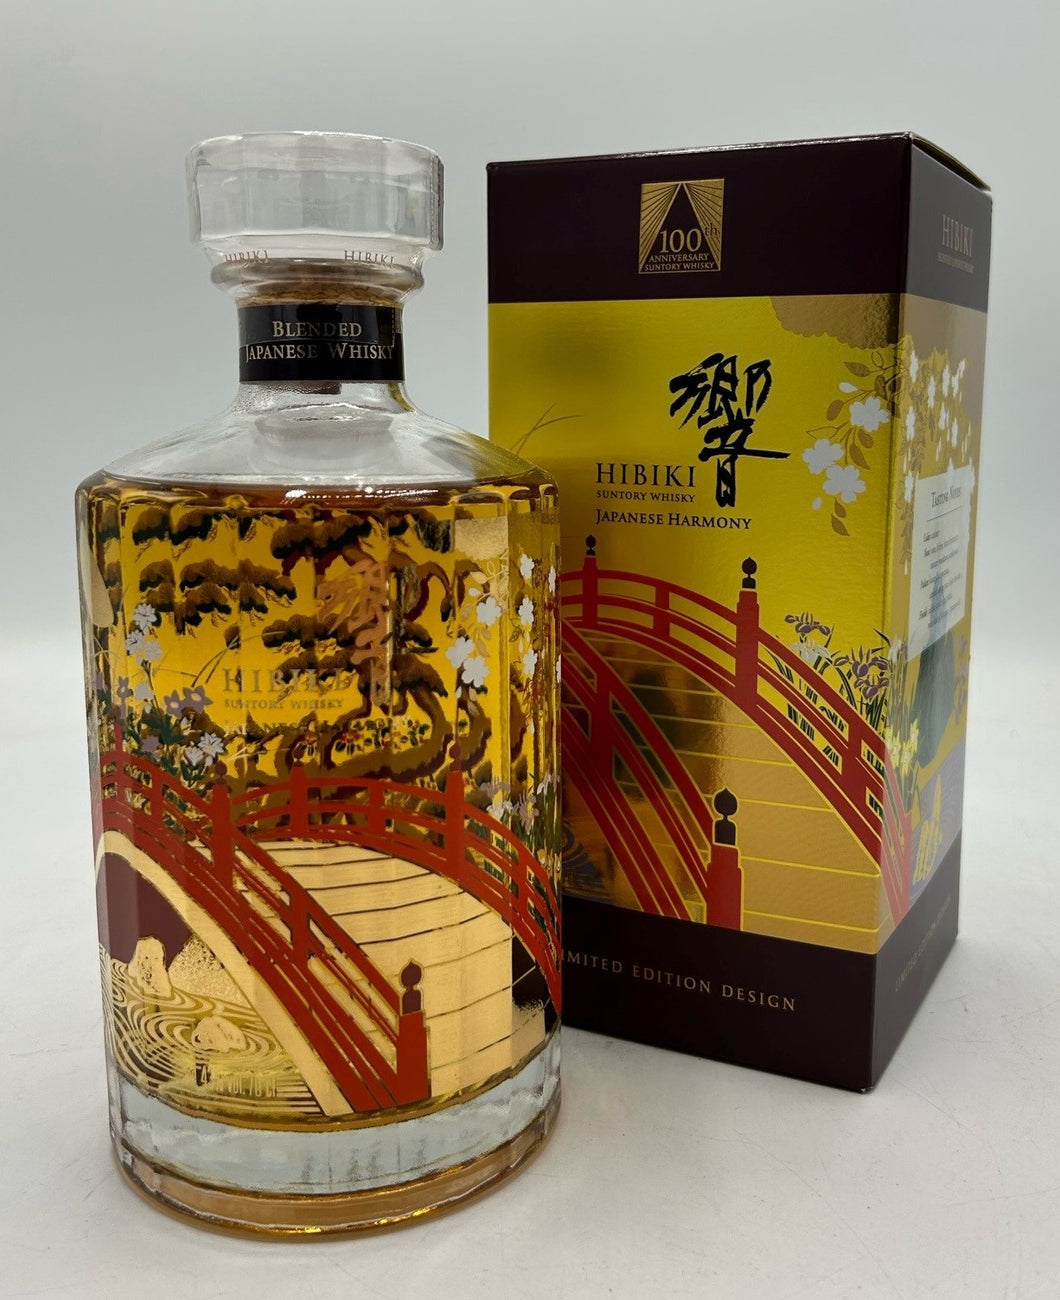 Hibiki Japanese Harmony 100th Anniversary Limited Edition Whisky